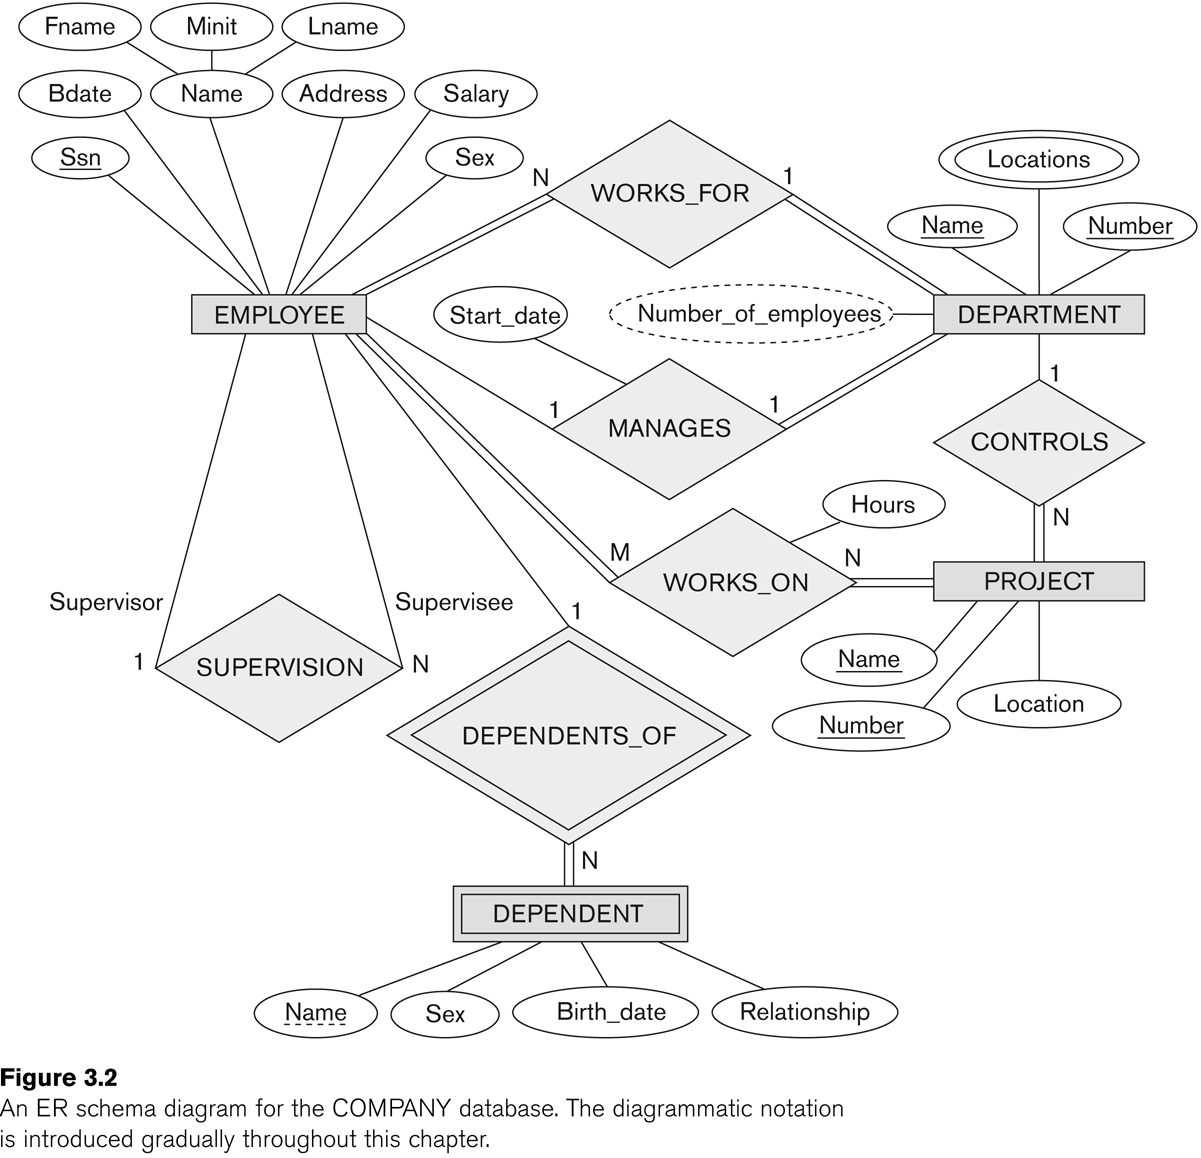 Entity-Relationship Modeling for Entity Relationship Diagram Relationships